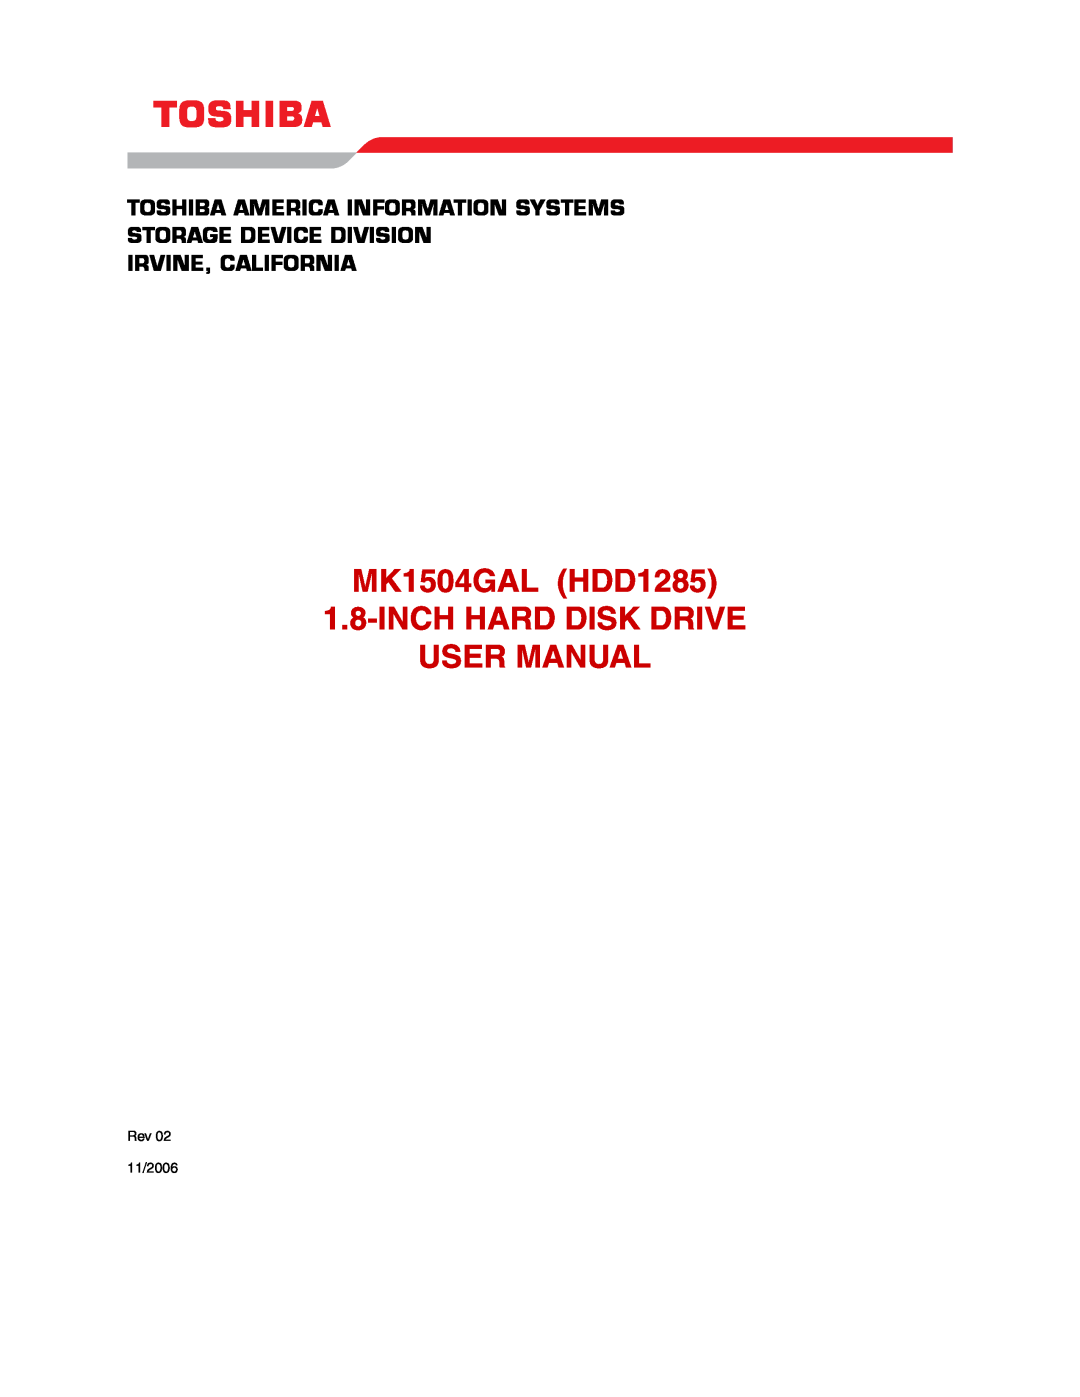 Toshiba MK1504GAL user manual Toshiba America Information Systems Storage Device Division, Irvine, California, Rev 11/2006 